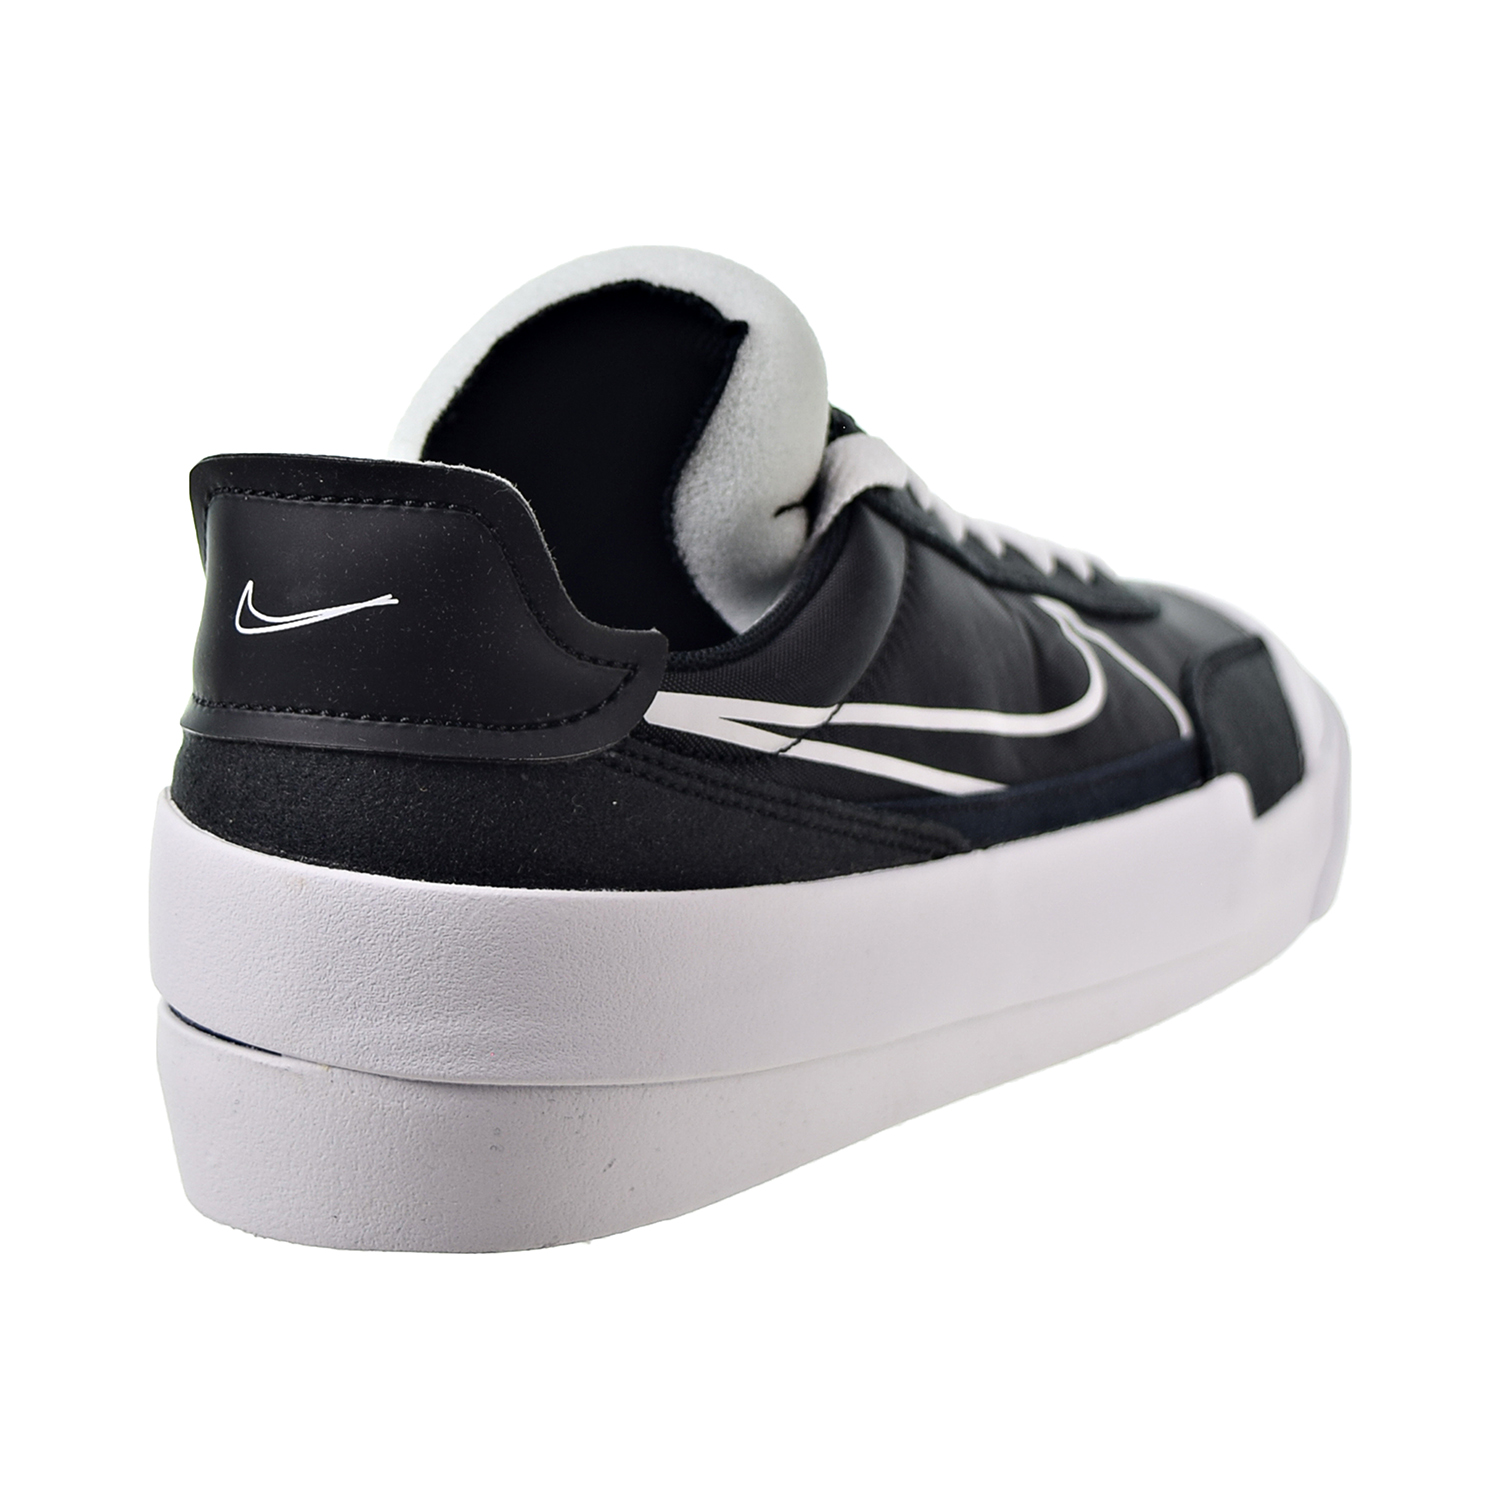 Nike Drop-Type Hybrid Men's Shoes Black-White cq0989-002 - image 3 of 6